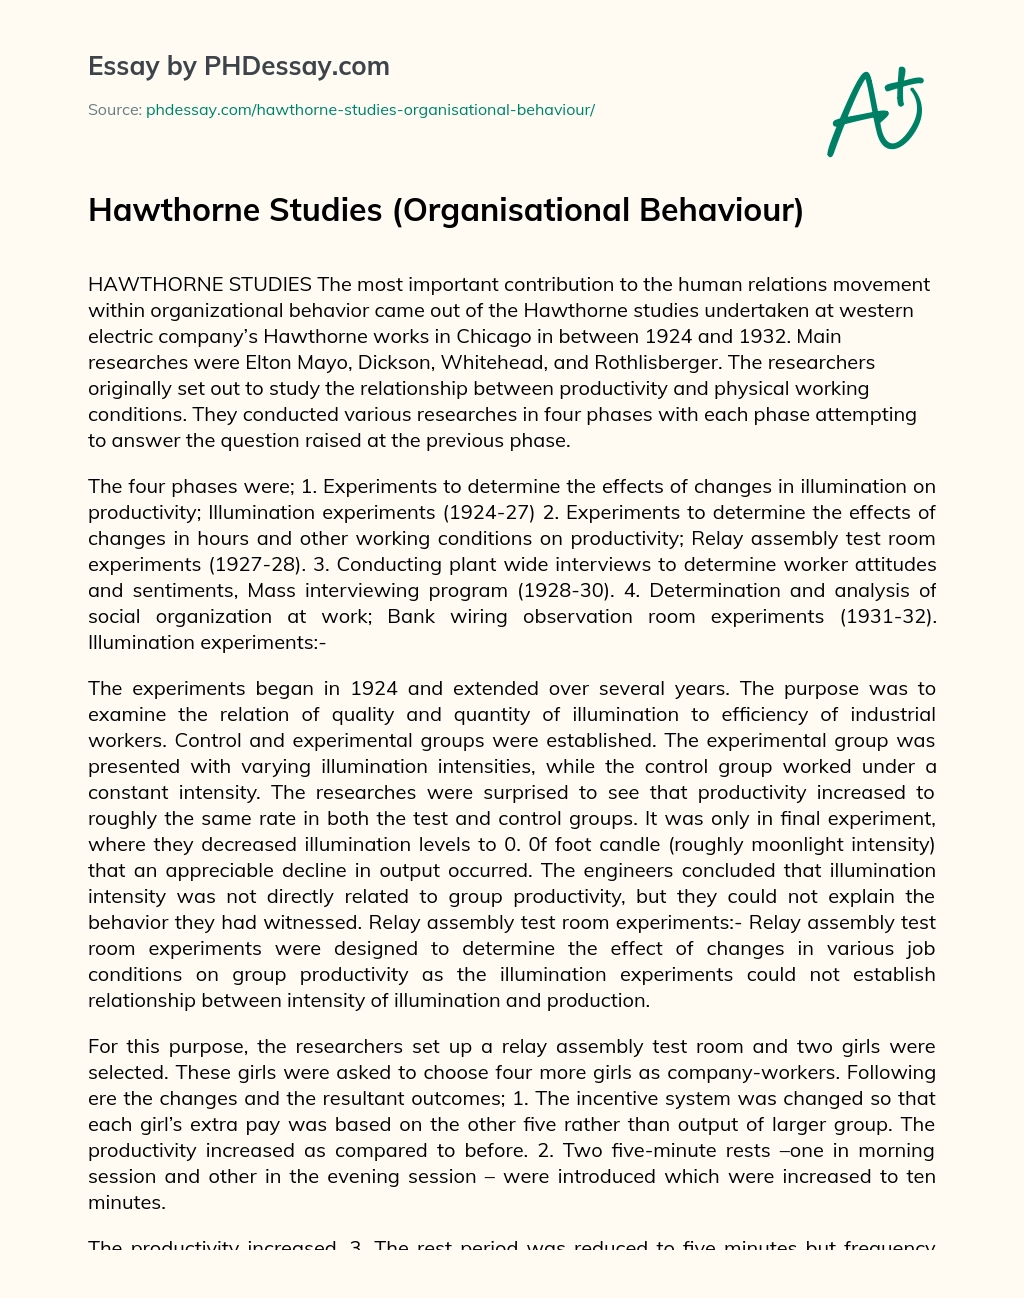 Hawthorne Studies (Organisational Behaviour) essay